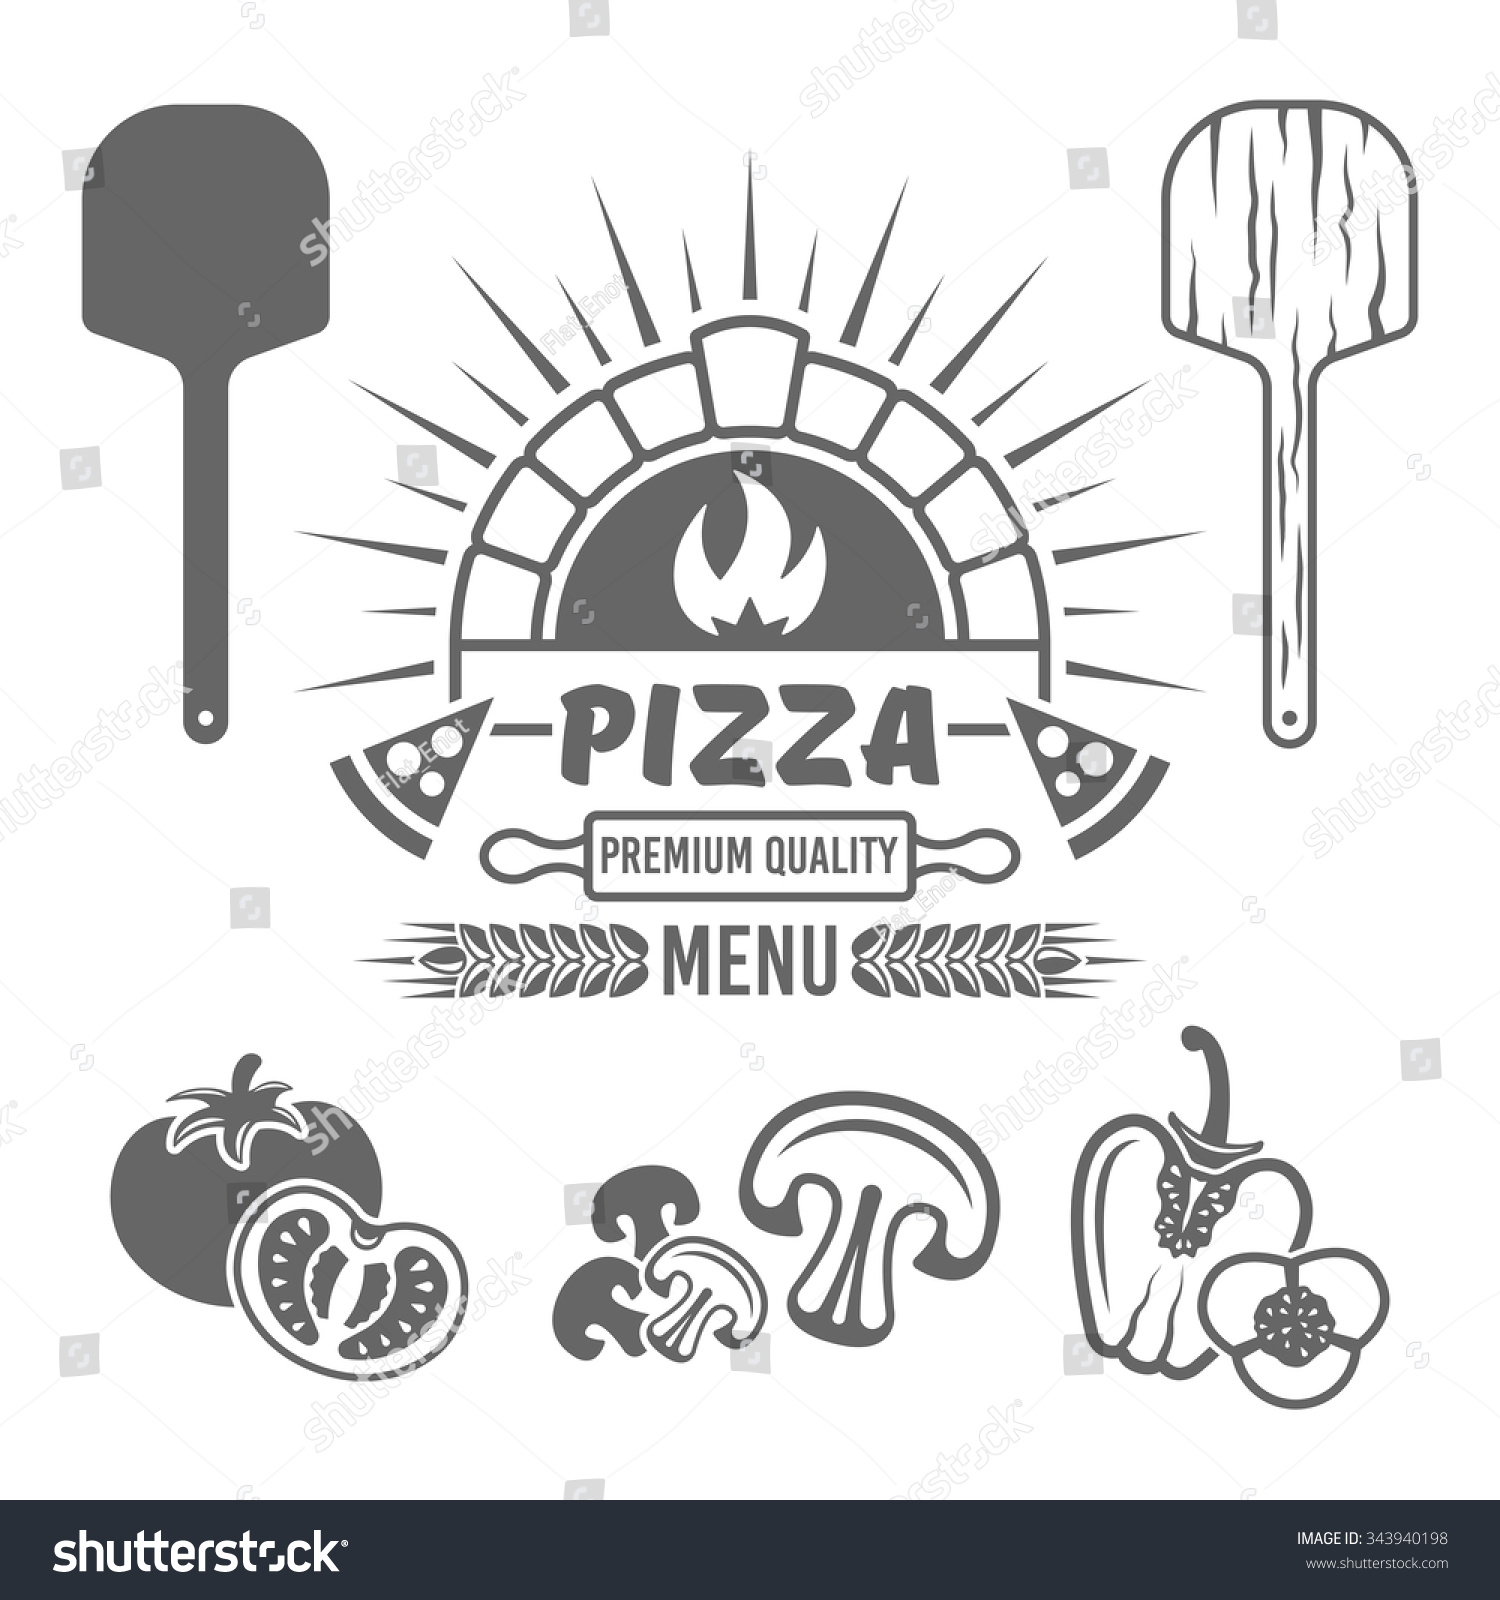 pizza menu clip art - photo #41